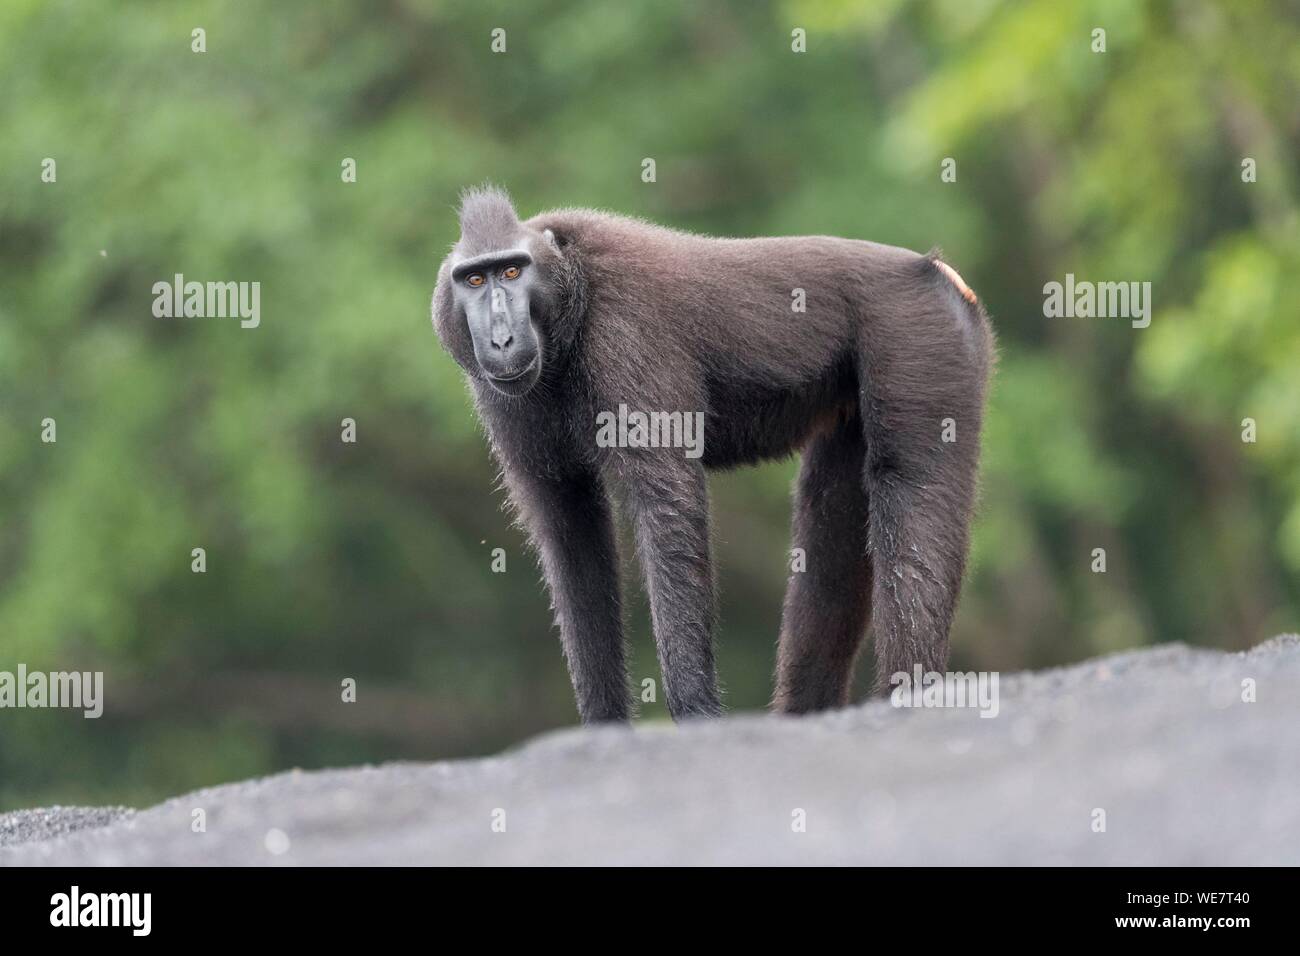 Indonesia, Celebes, Sulawesi, Tangkoko National Park, Celebes crested macaque or crested black macaque, Sulawesi crested macaque, or the black ape (Macaca nigra) Stock Photo